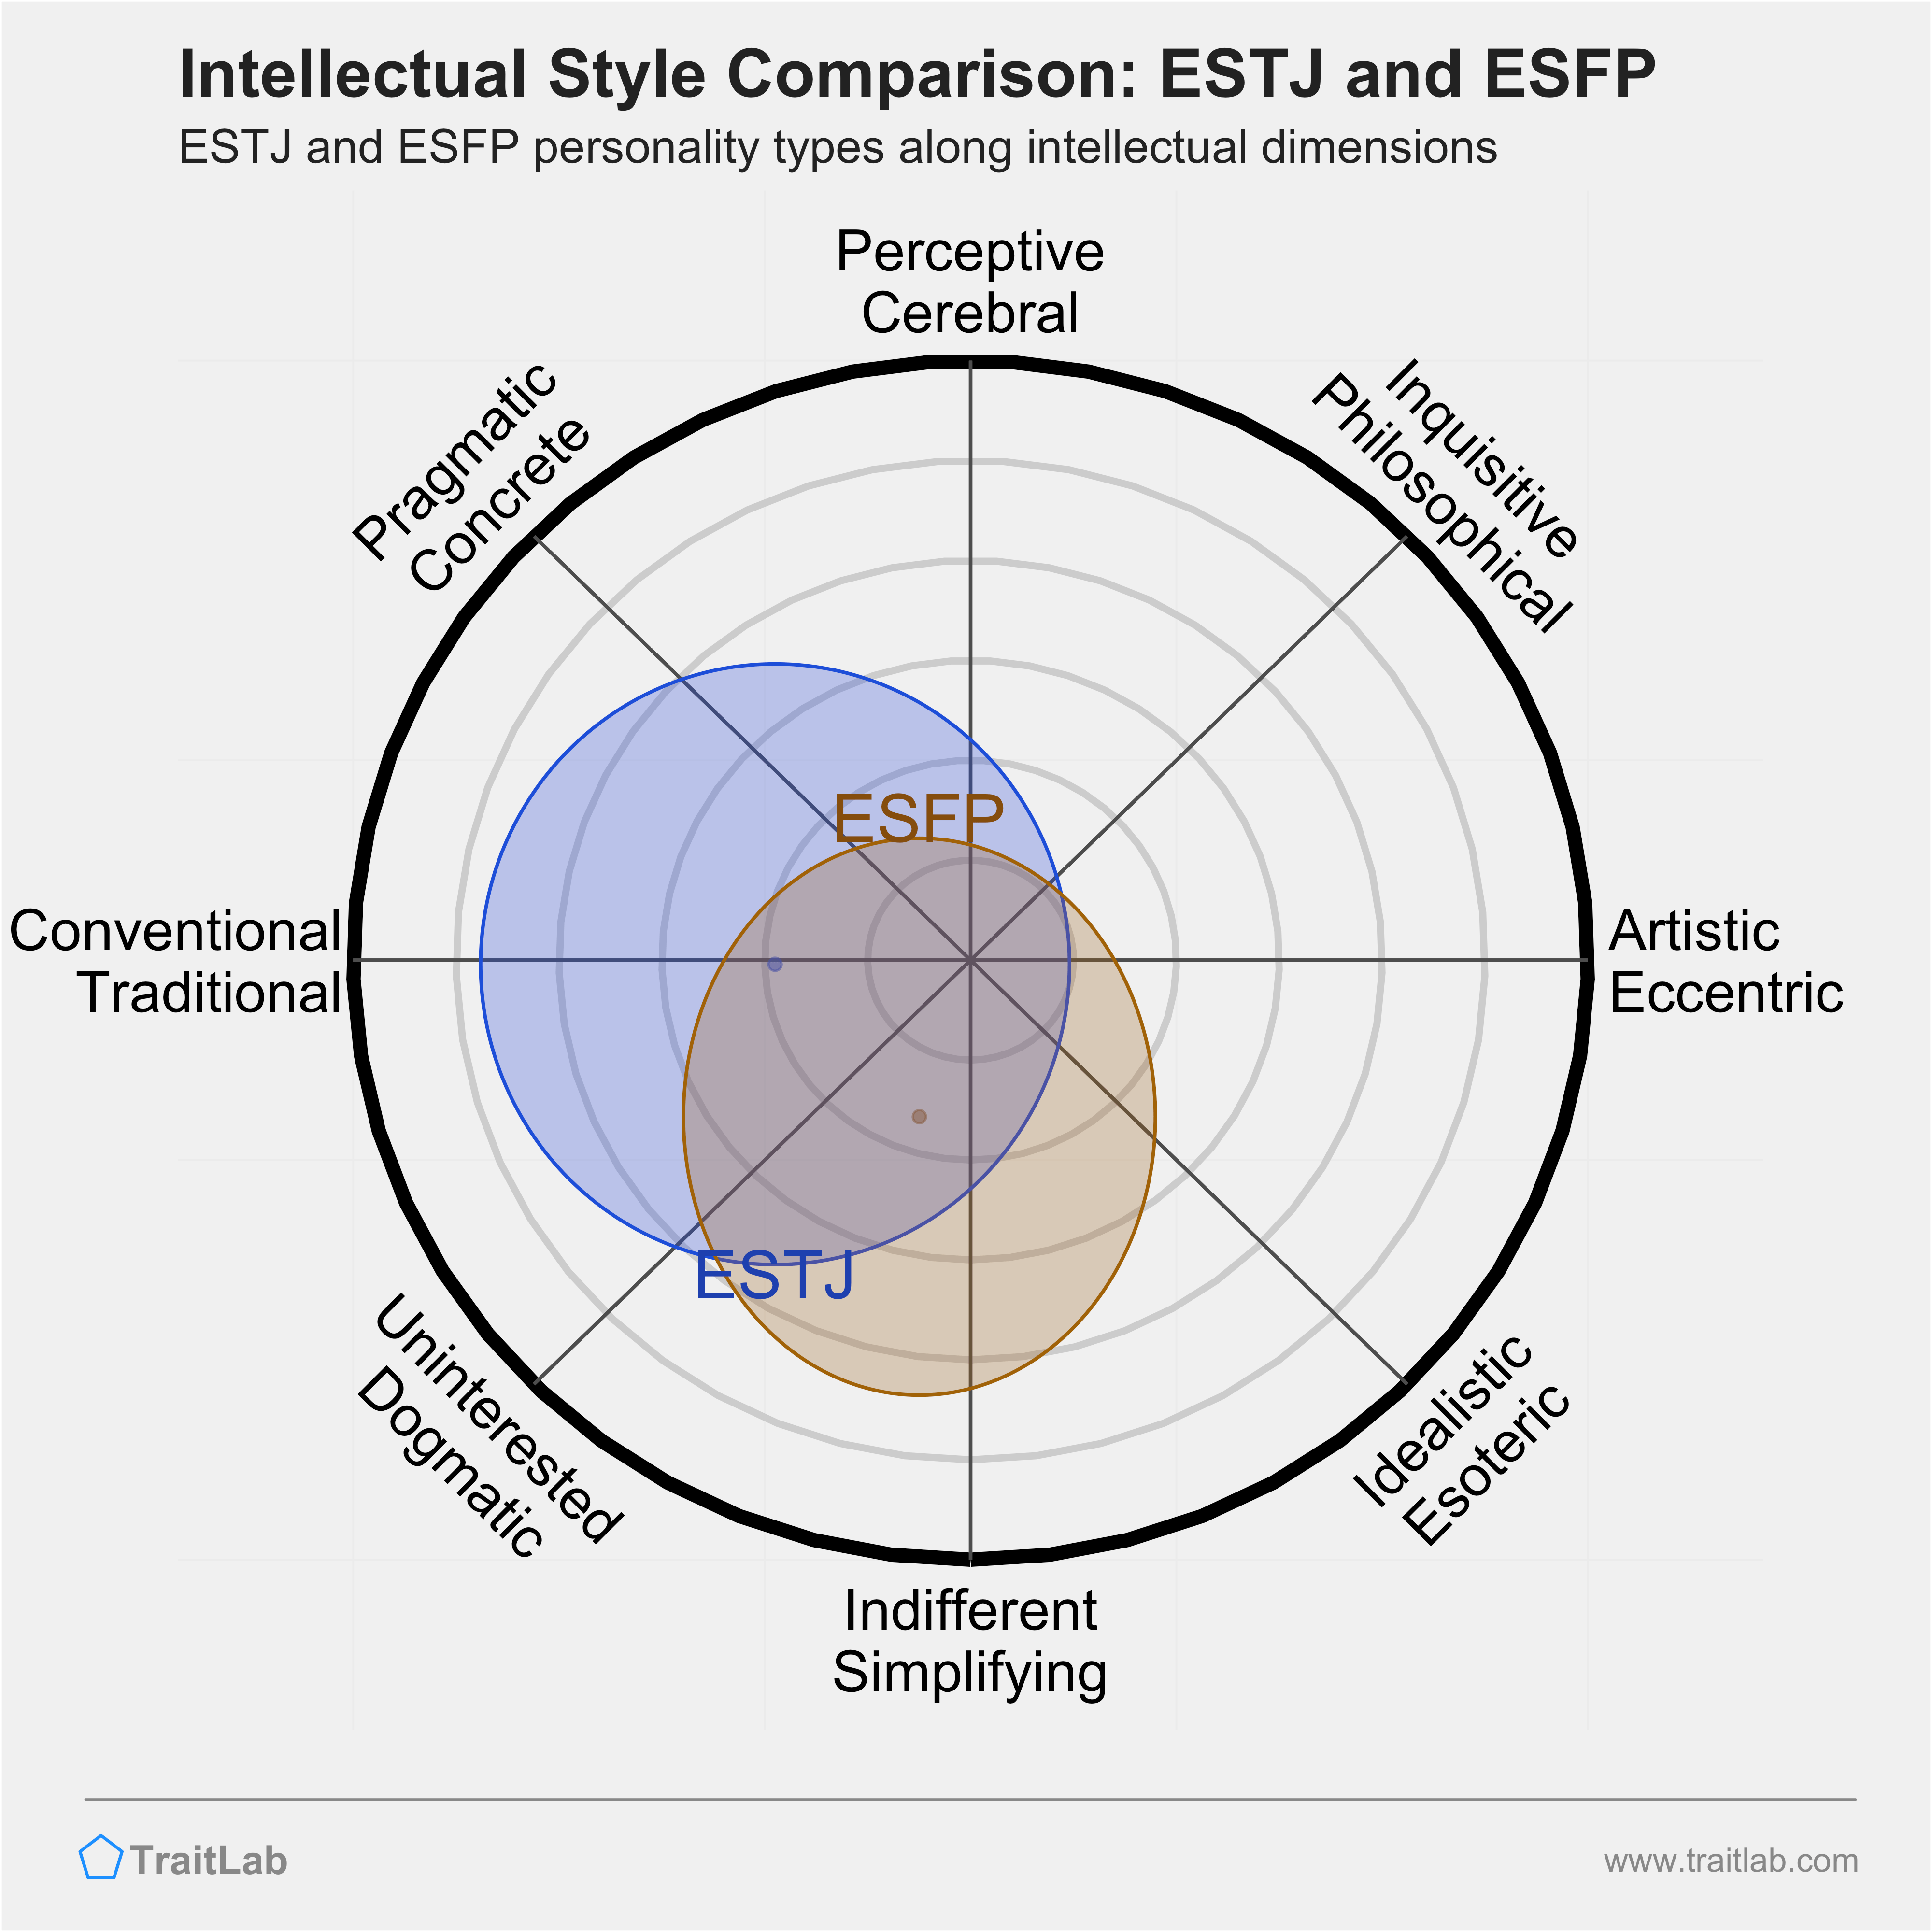 ESTJ and ESFP comparison across intellectual dimensions